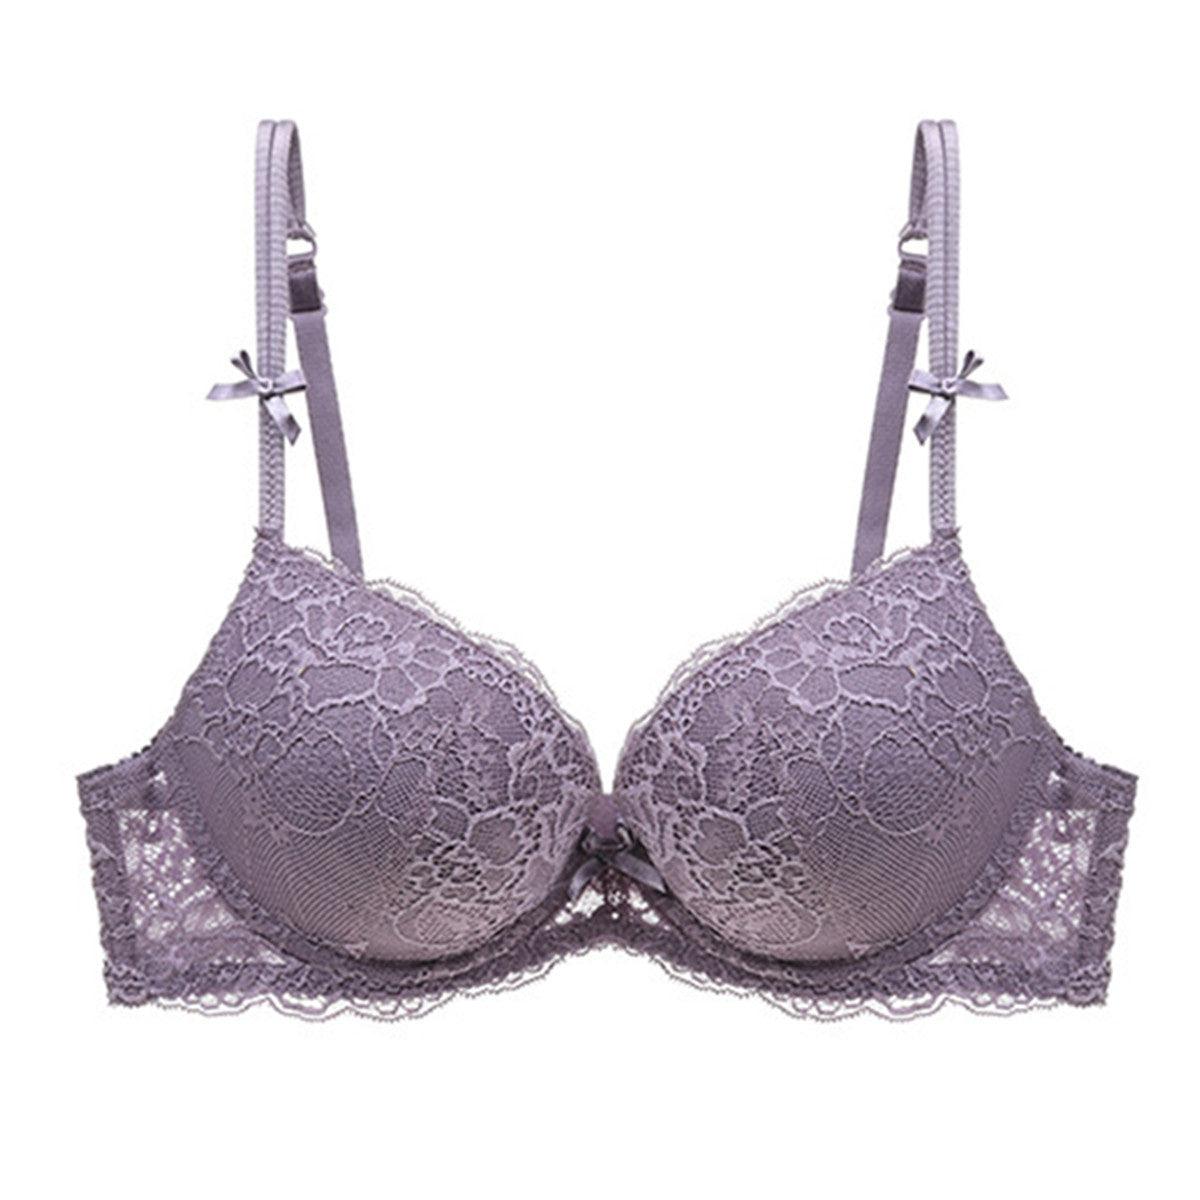 Small Breast Push up Bra - ForVanity bras, women's lingerie 